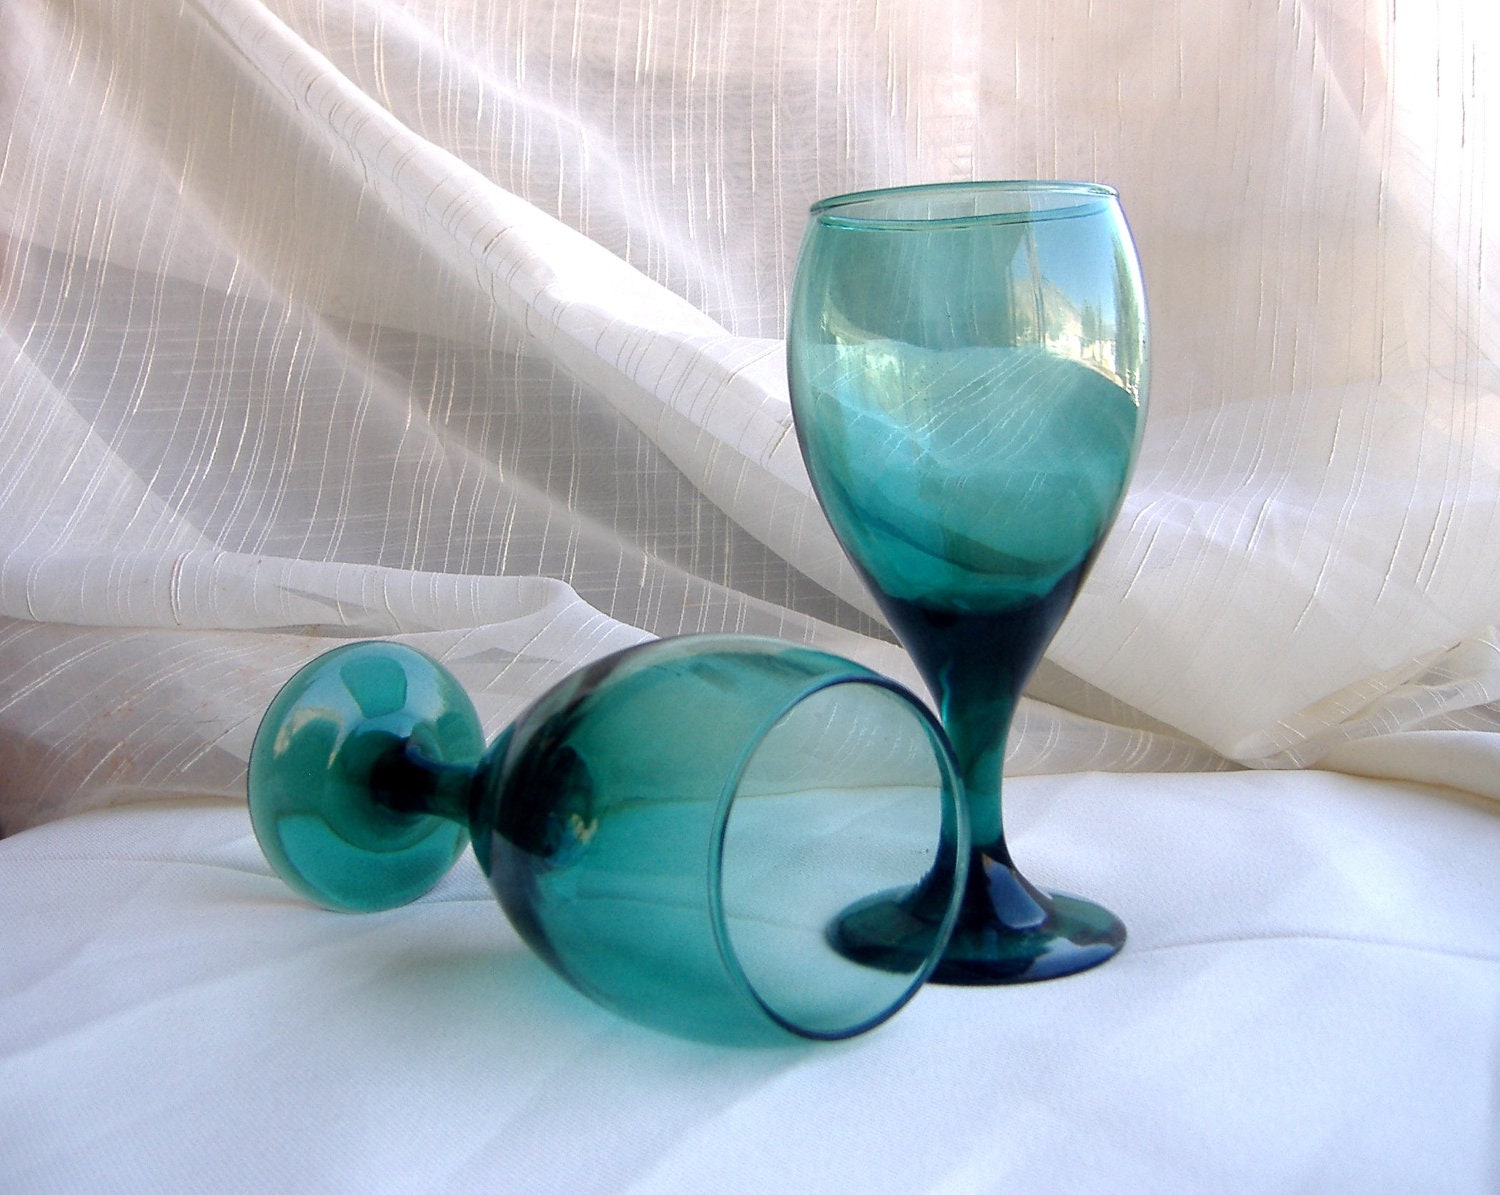 2 vintage teal green glass wine glasses, goblets, stemware -  set of two - VauntyVictorian